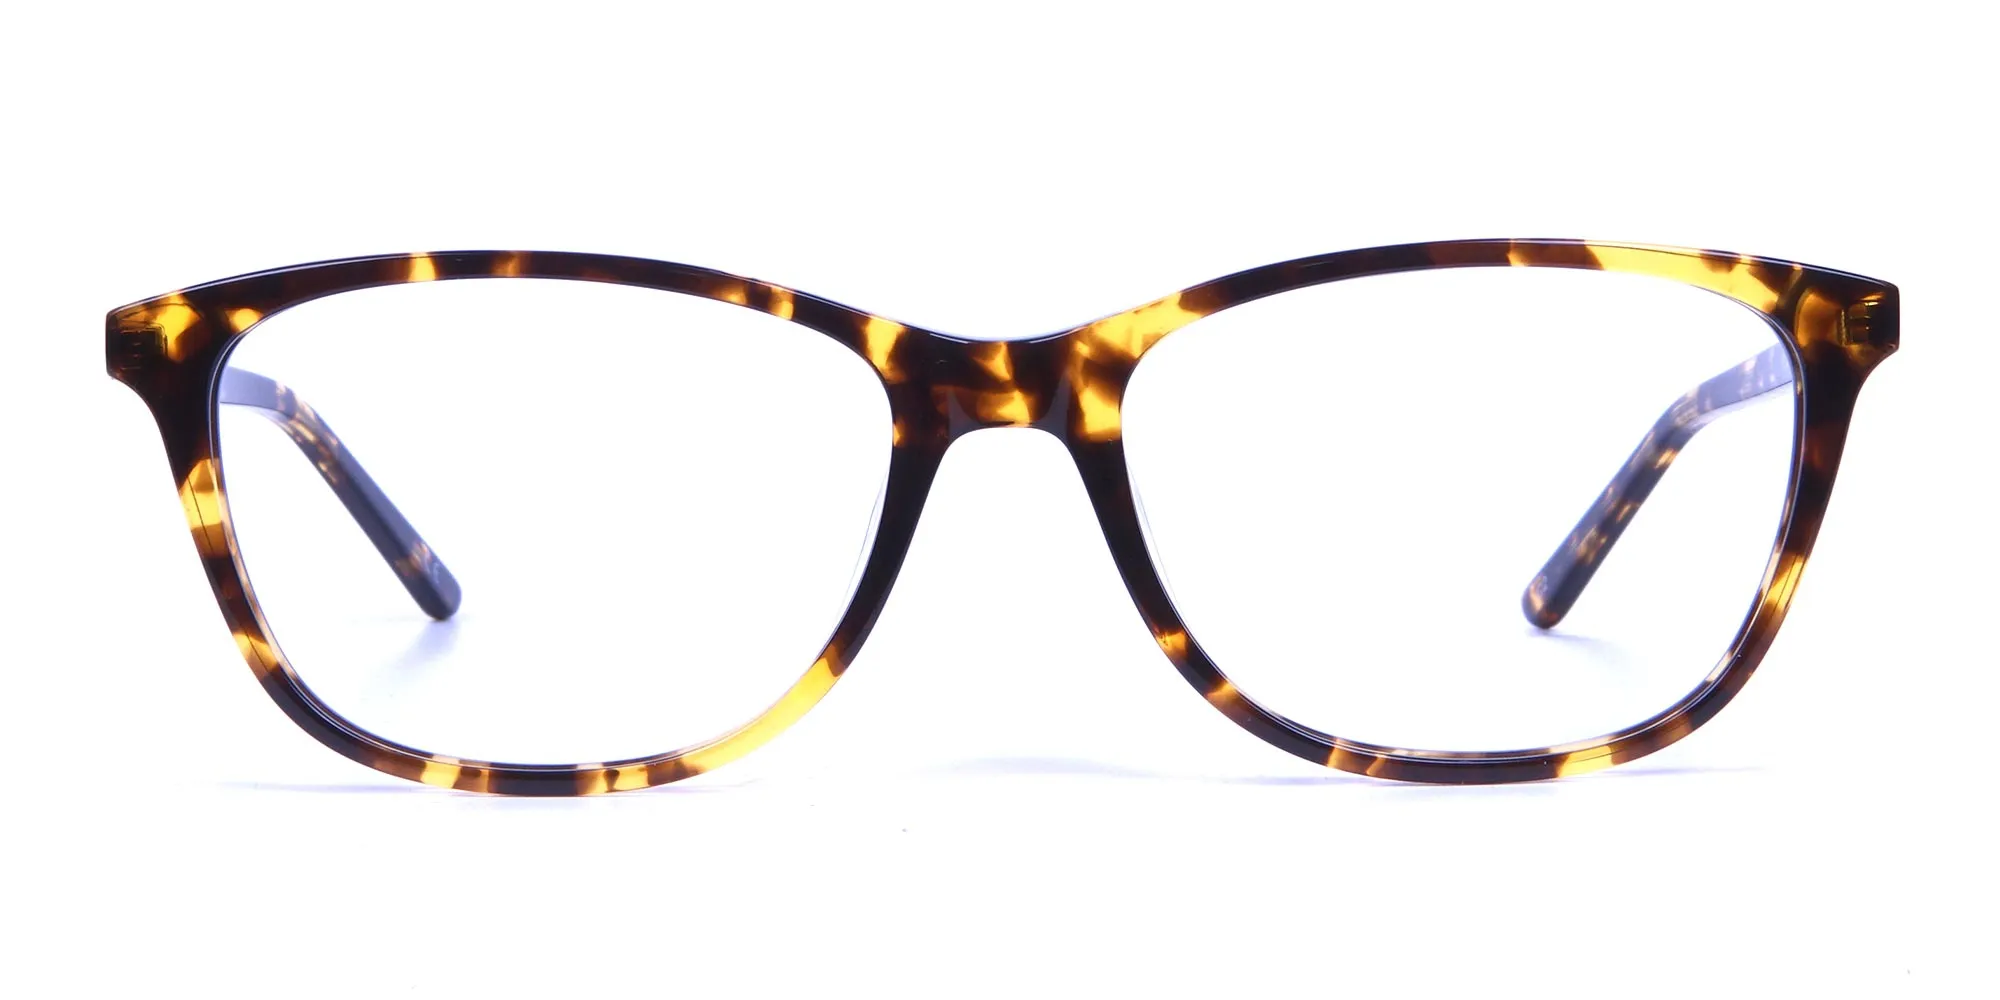 Warm-toned Glasses in Tortoiseshell - 1